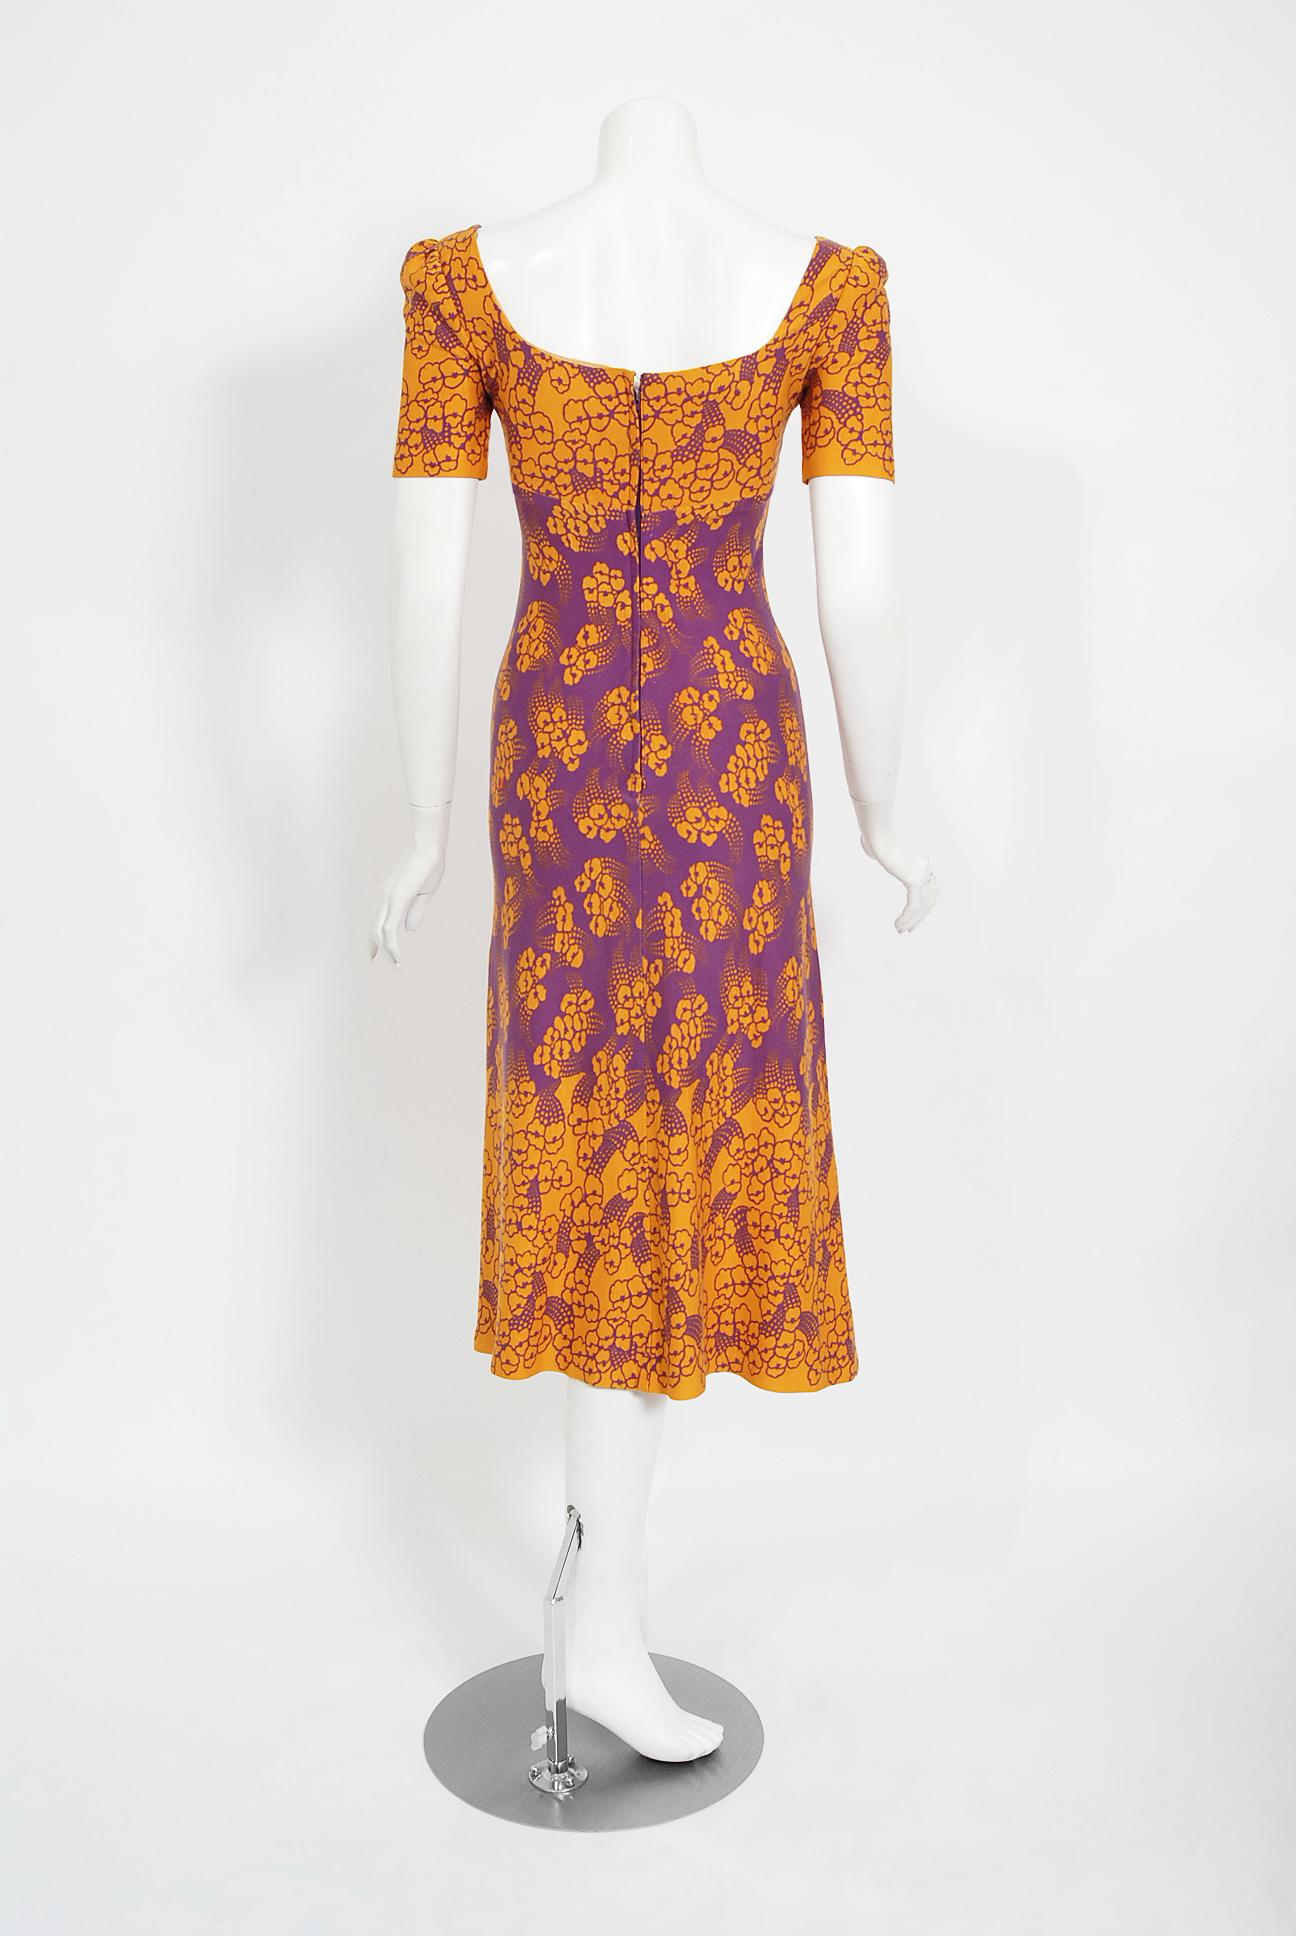 1969 Biba London Purple & Marigold Deco Floral Print Jersey Low-Plunge Dress 2